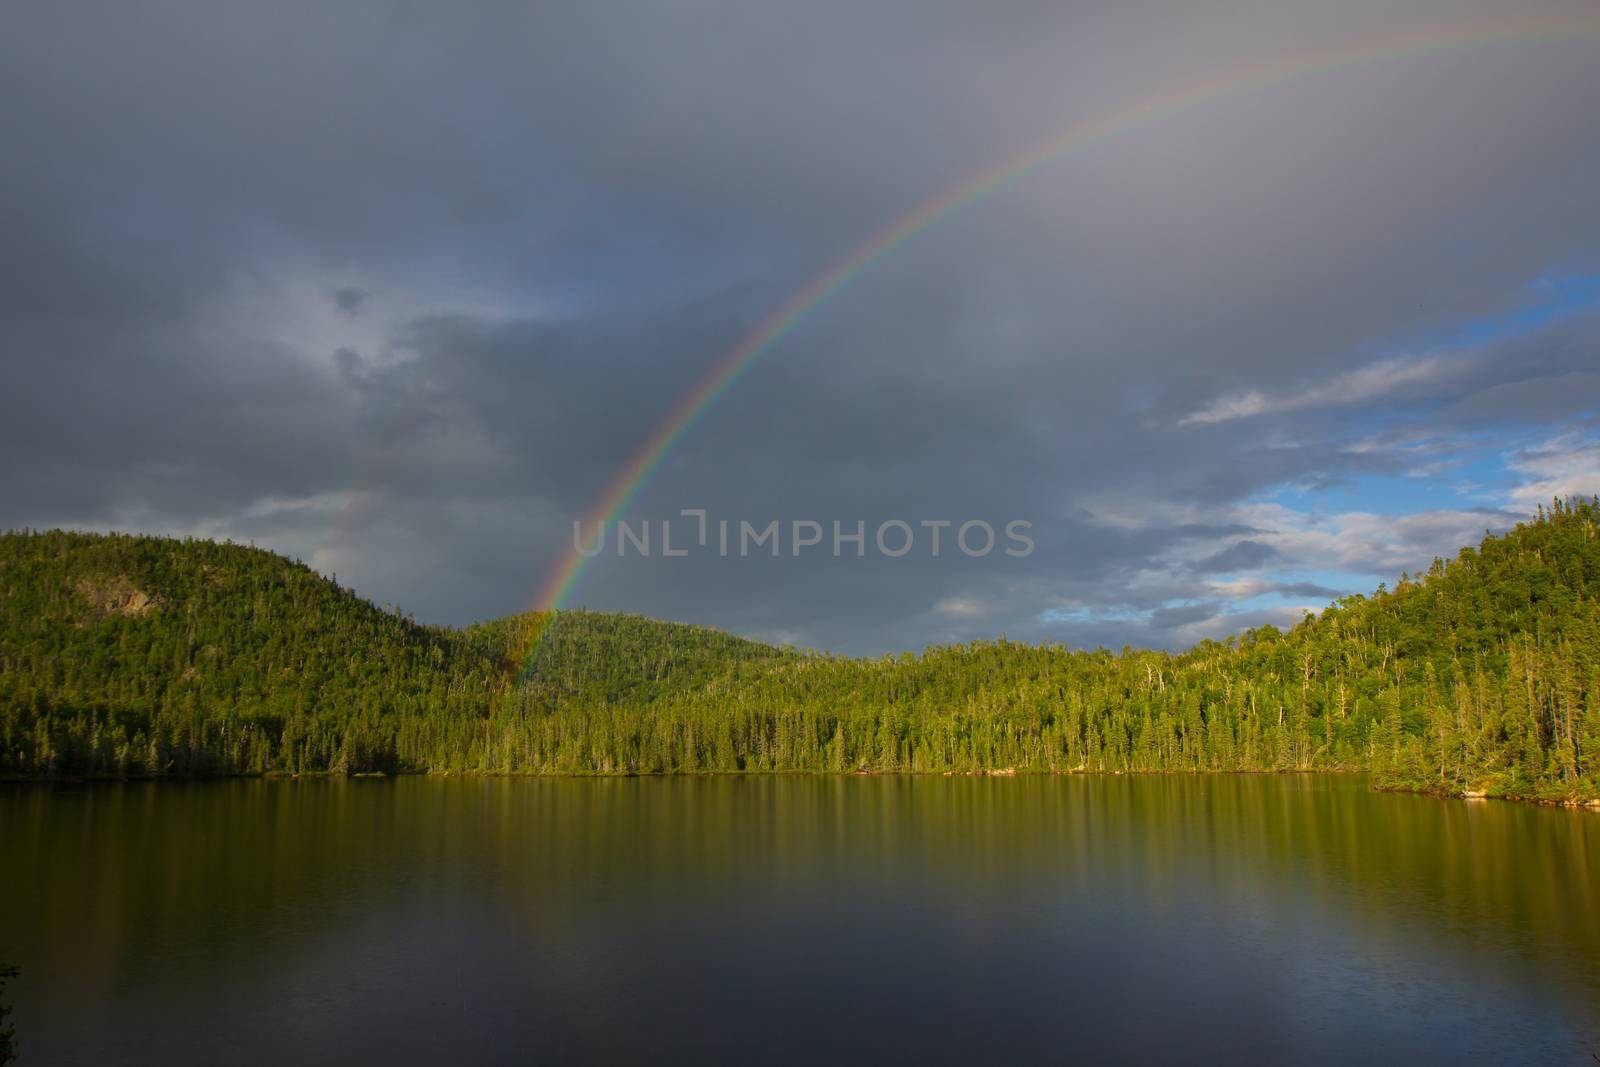 rainbow over the lake, Northern Ontario, Canada